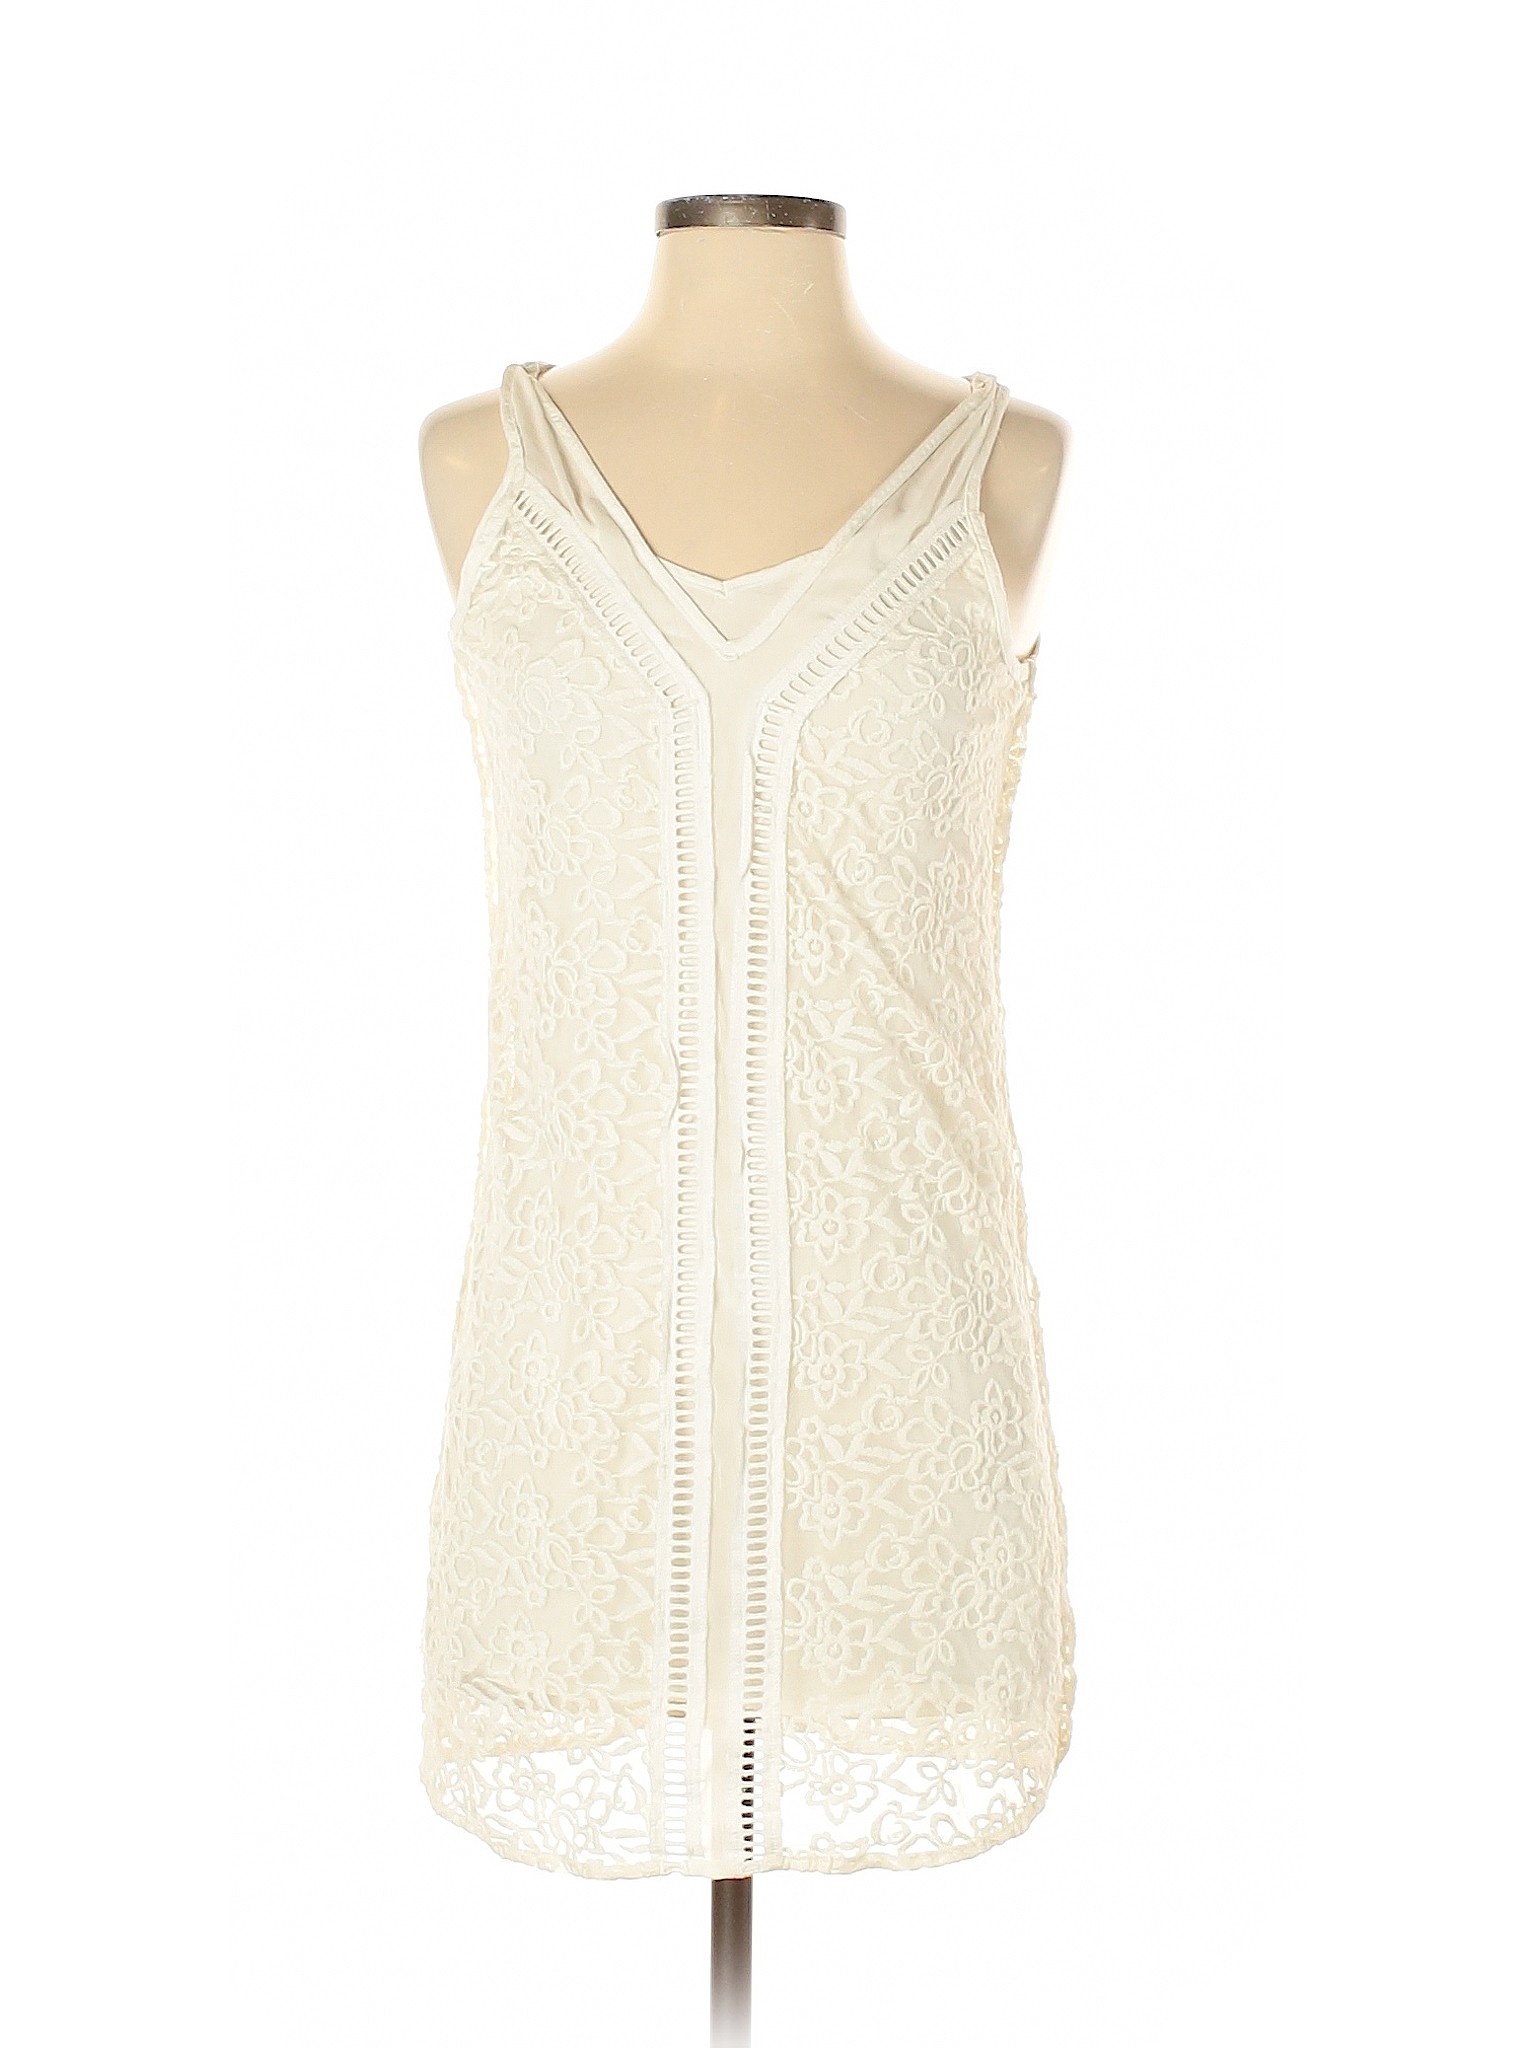 Abercrombie & Fitch Women Ivory Casual Dress XS | eBay